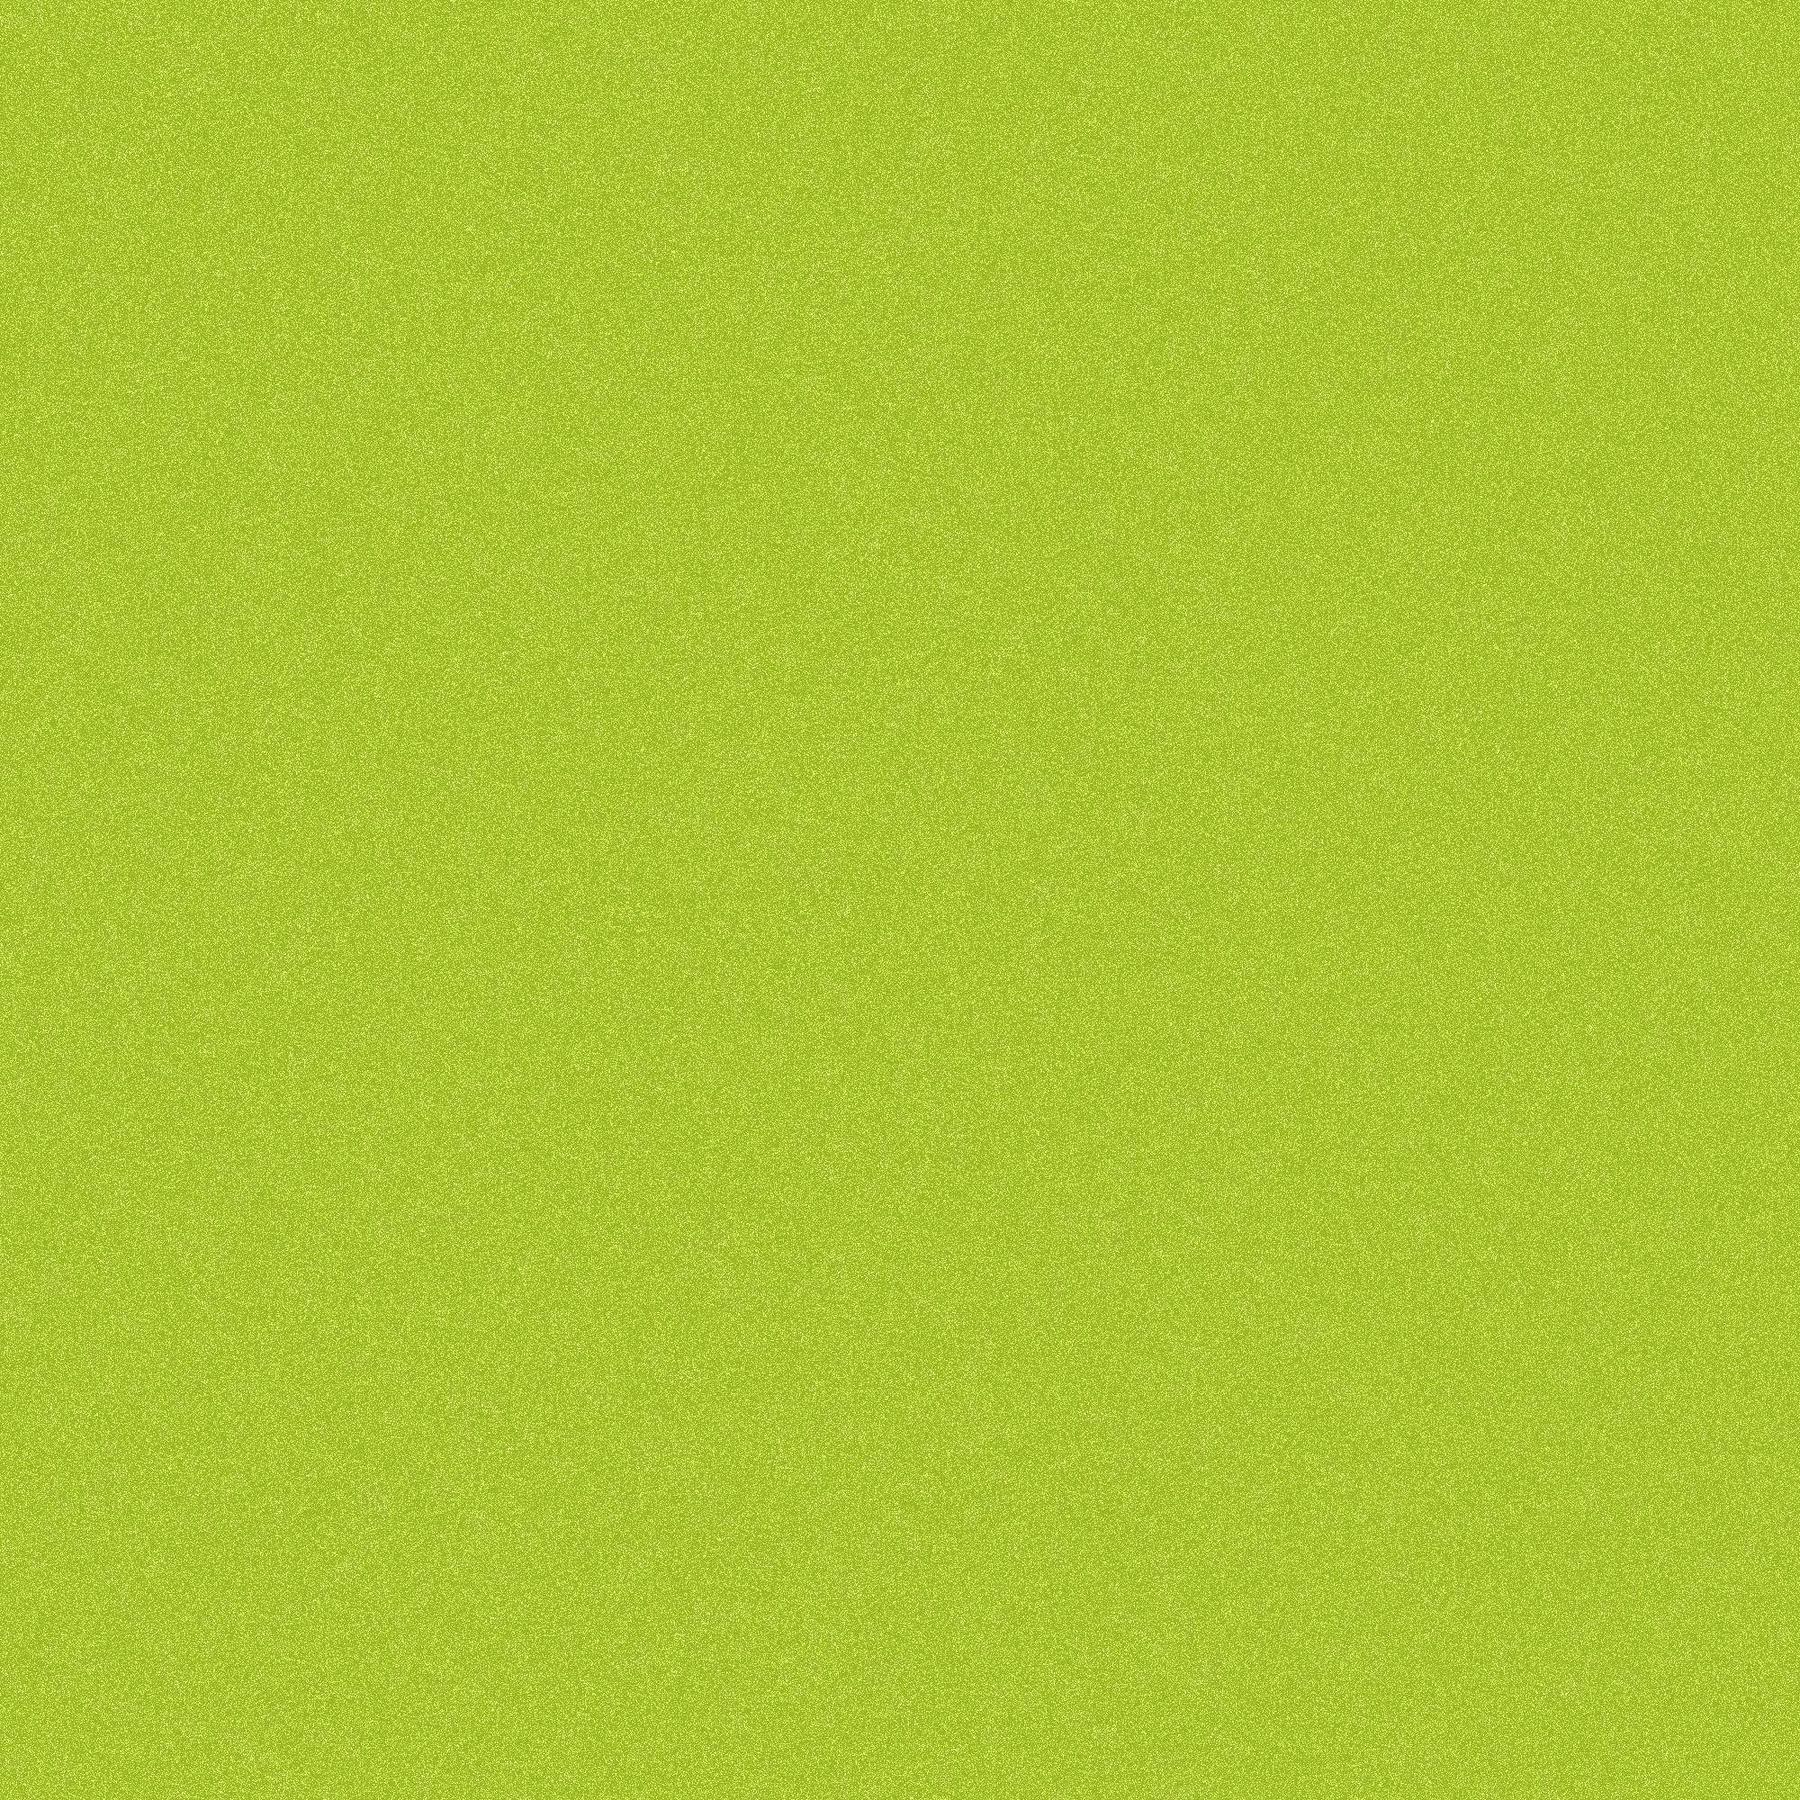 Light Green" Noise backgrounds texture